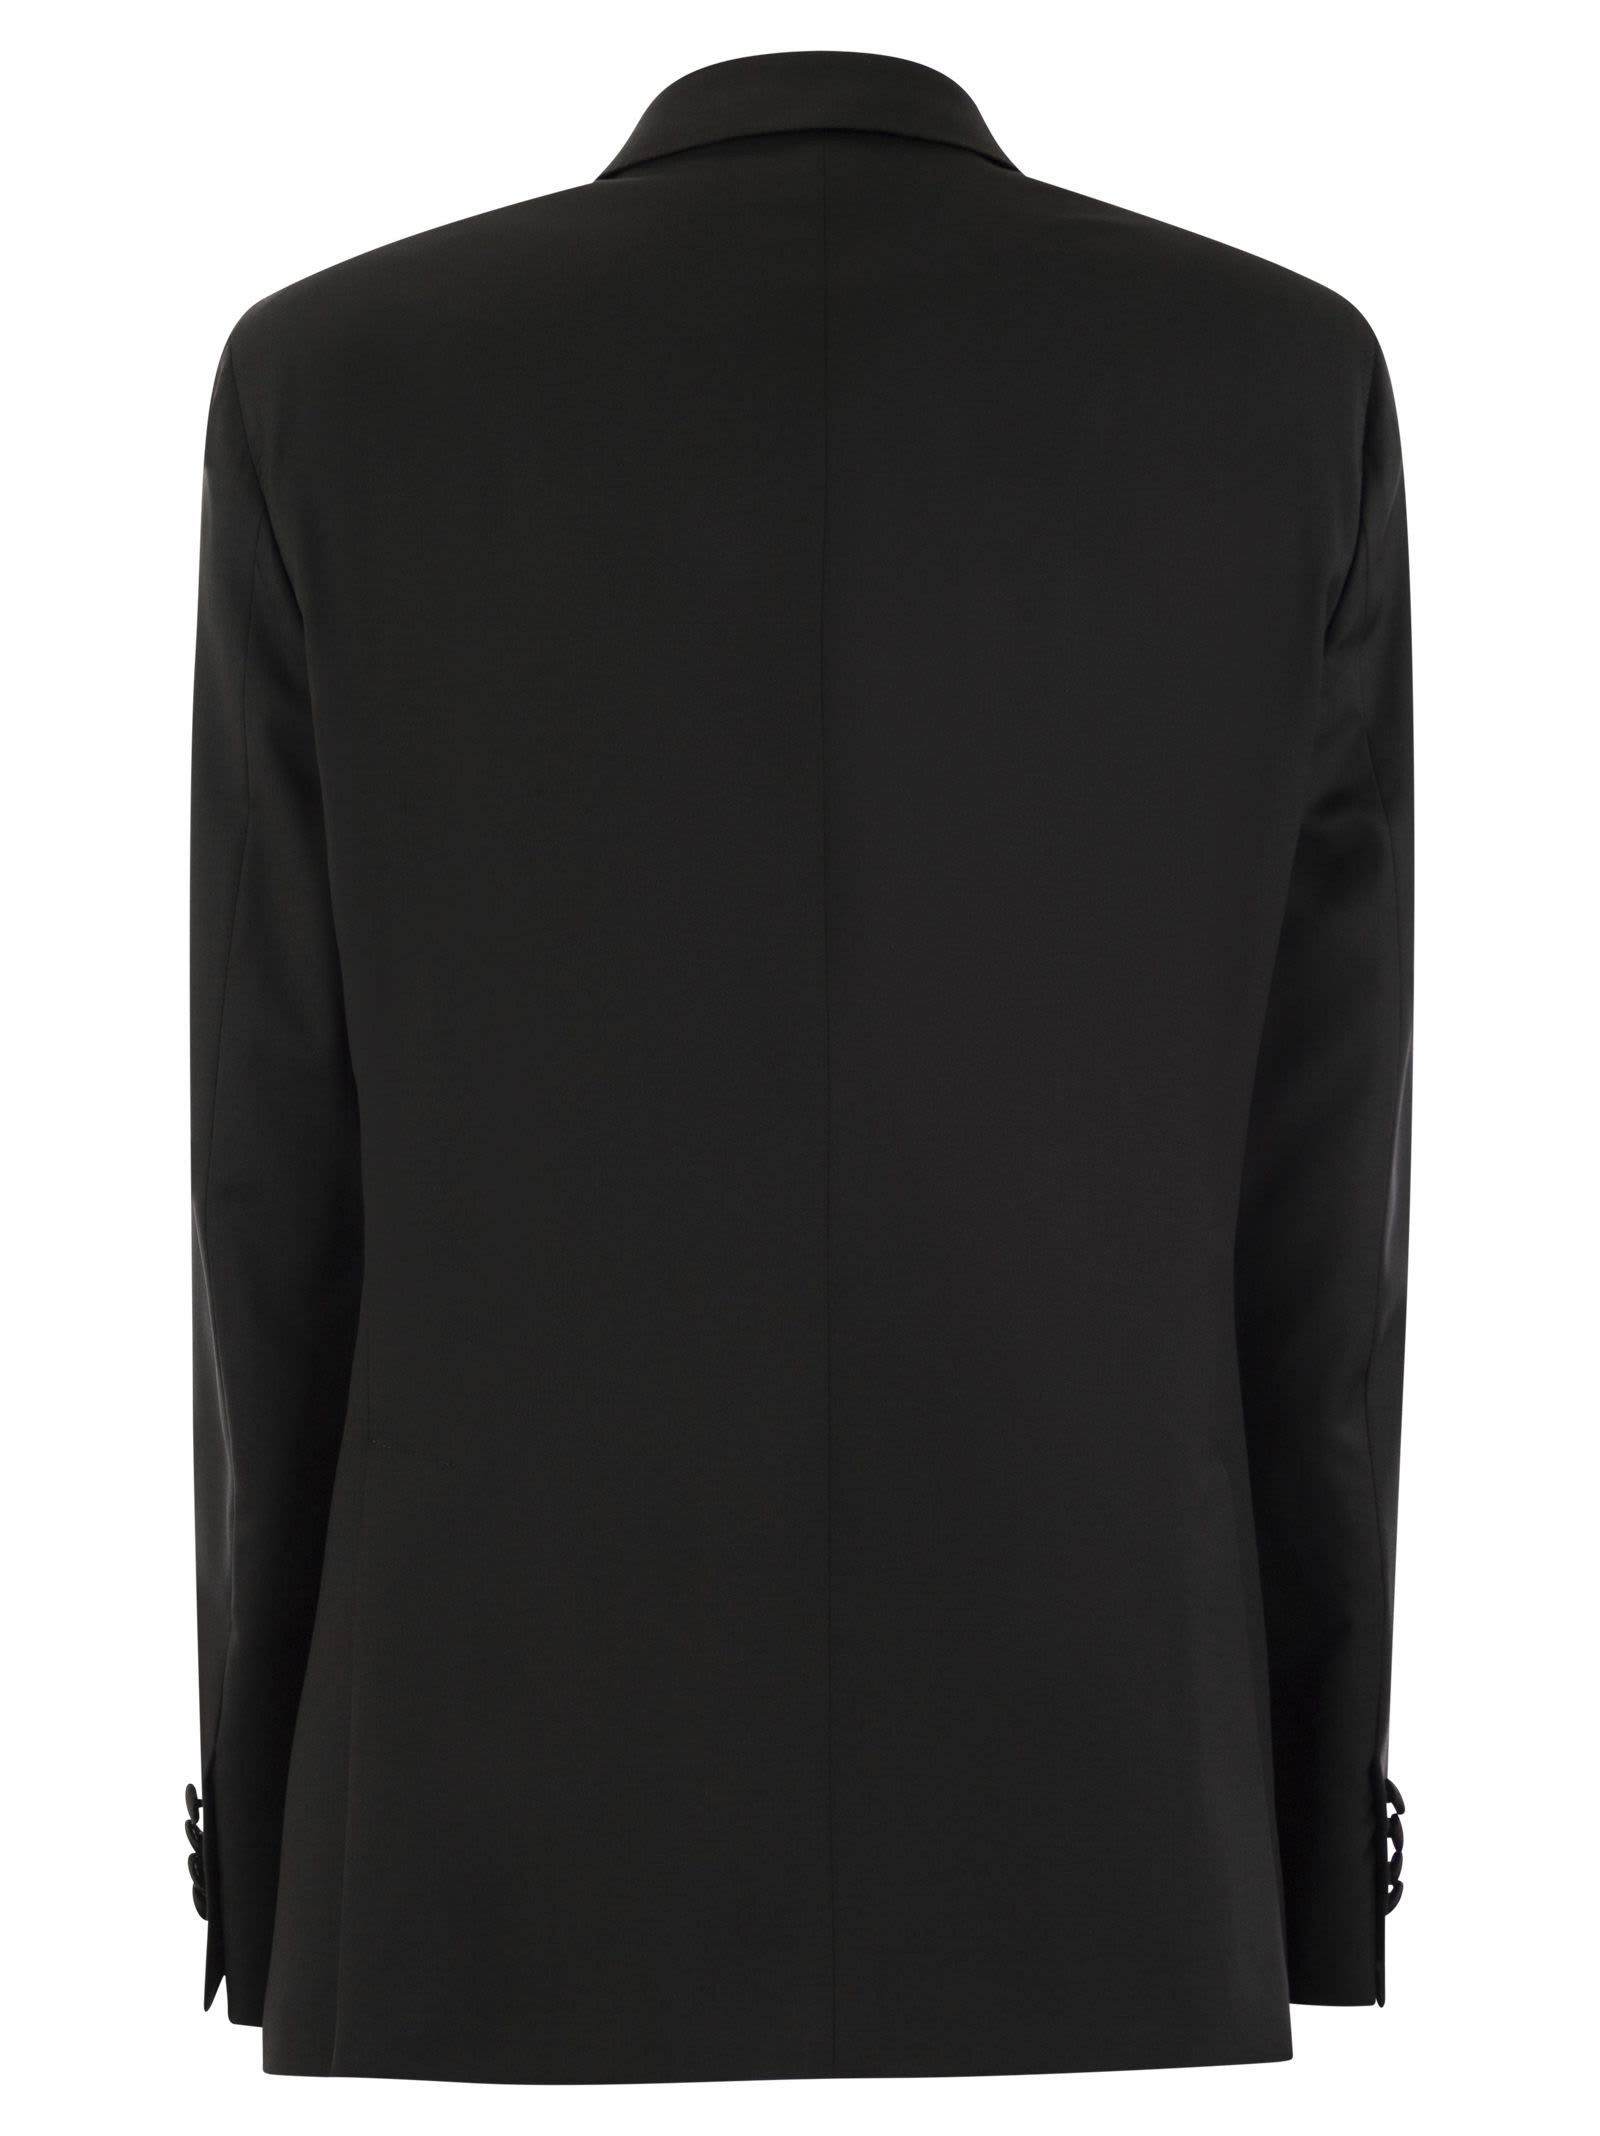 Shop Saulina Milano Fresh Wool Double Breasted Jacket In Black